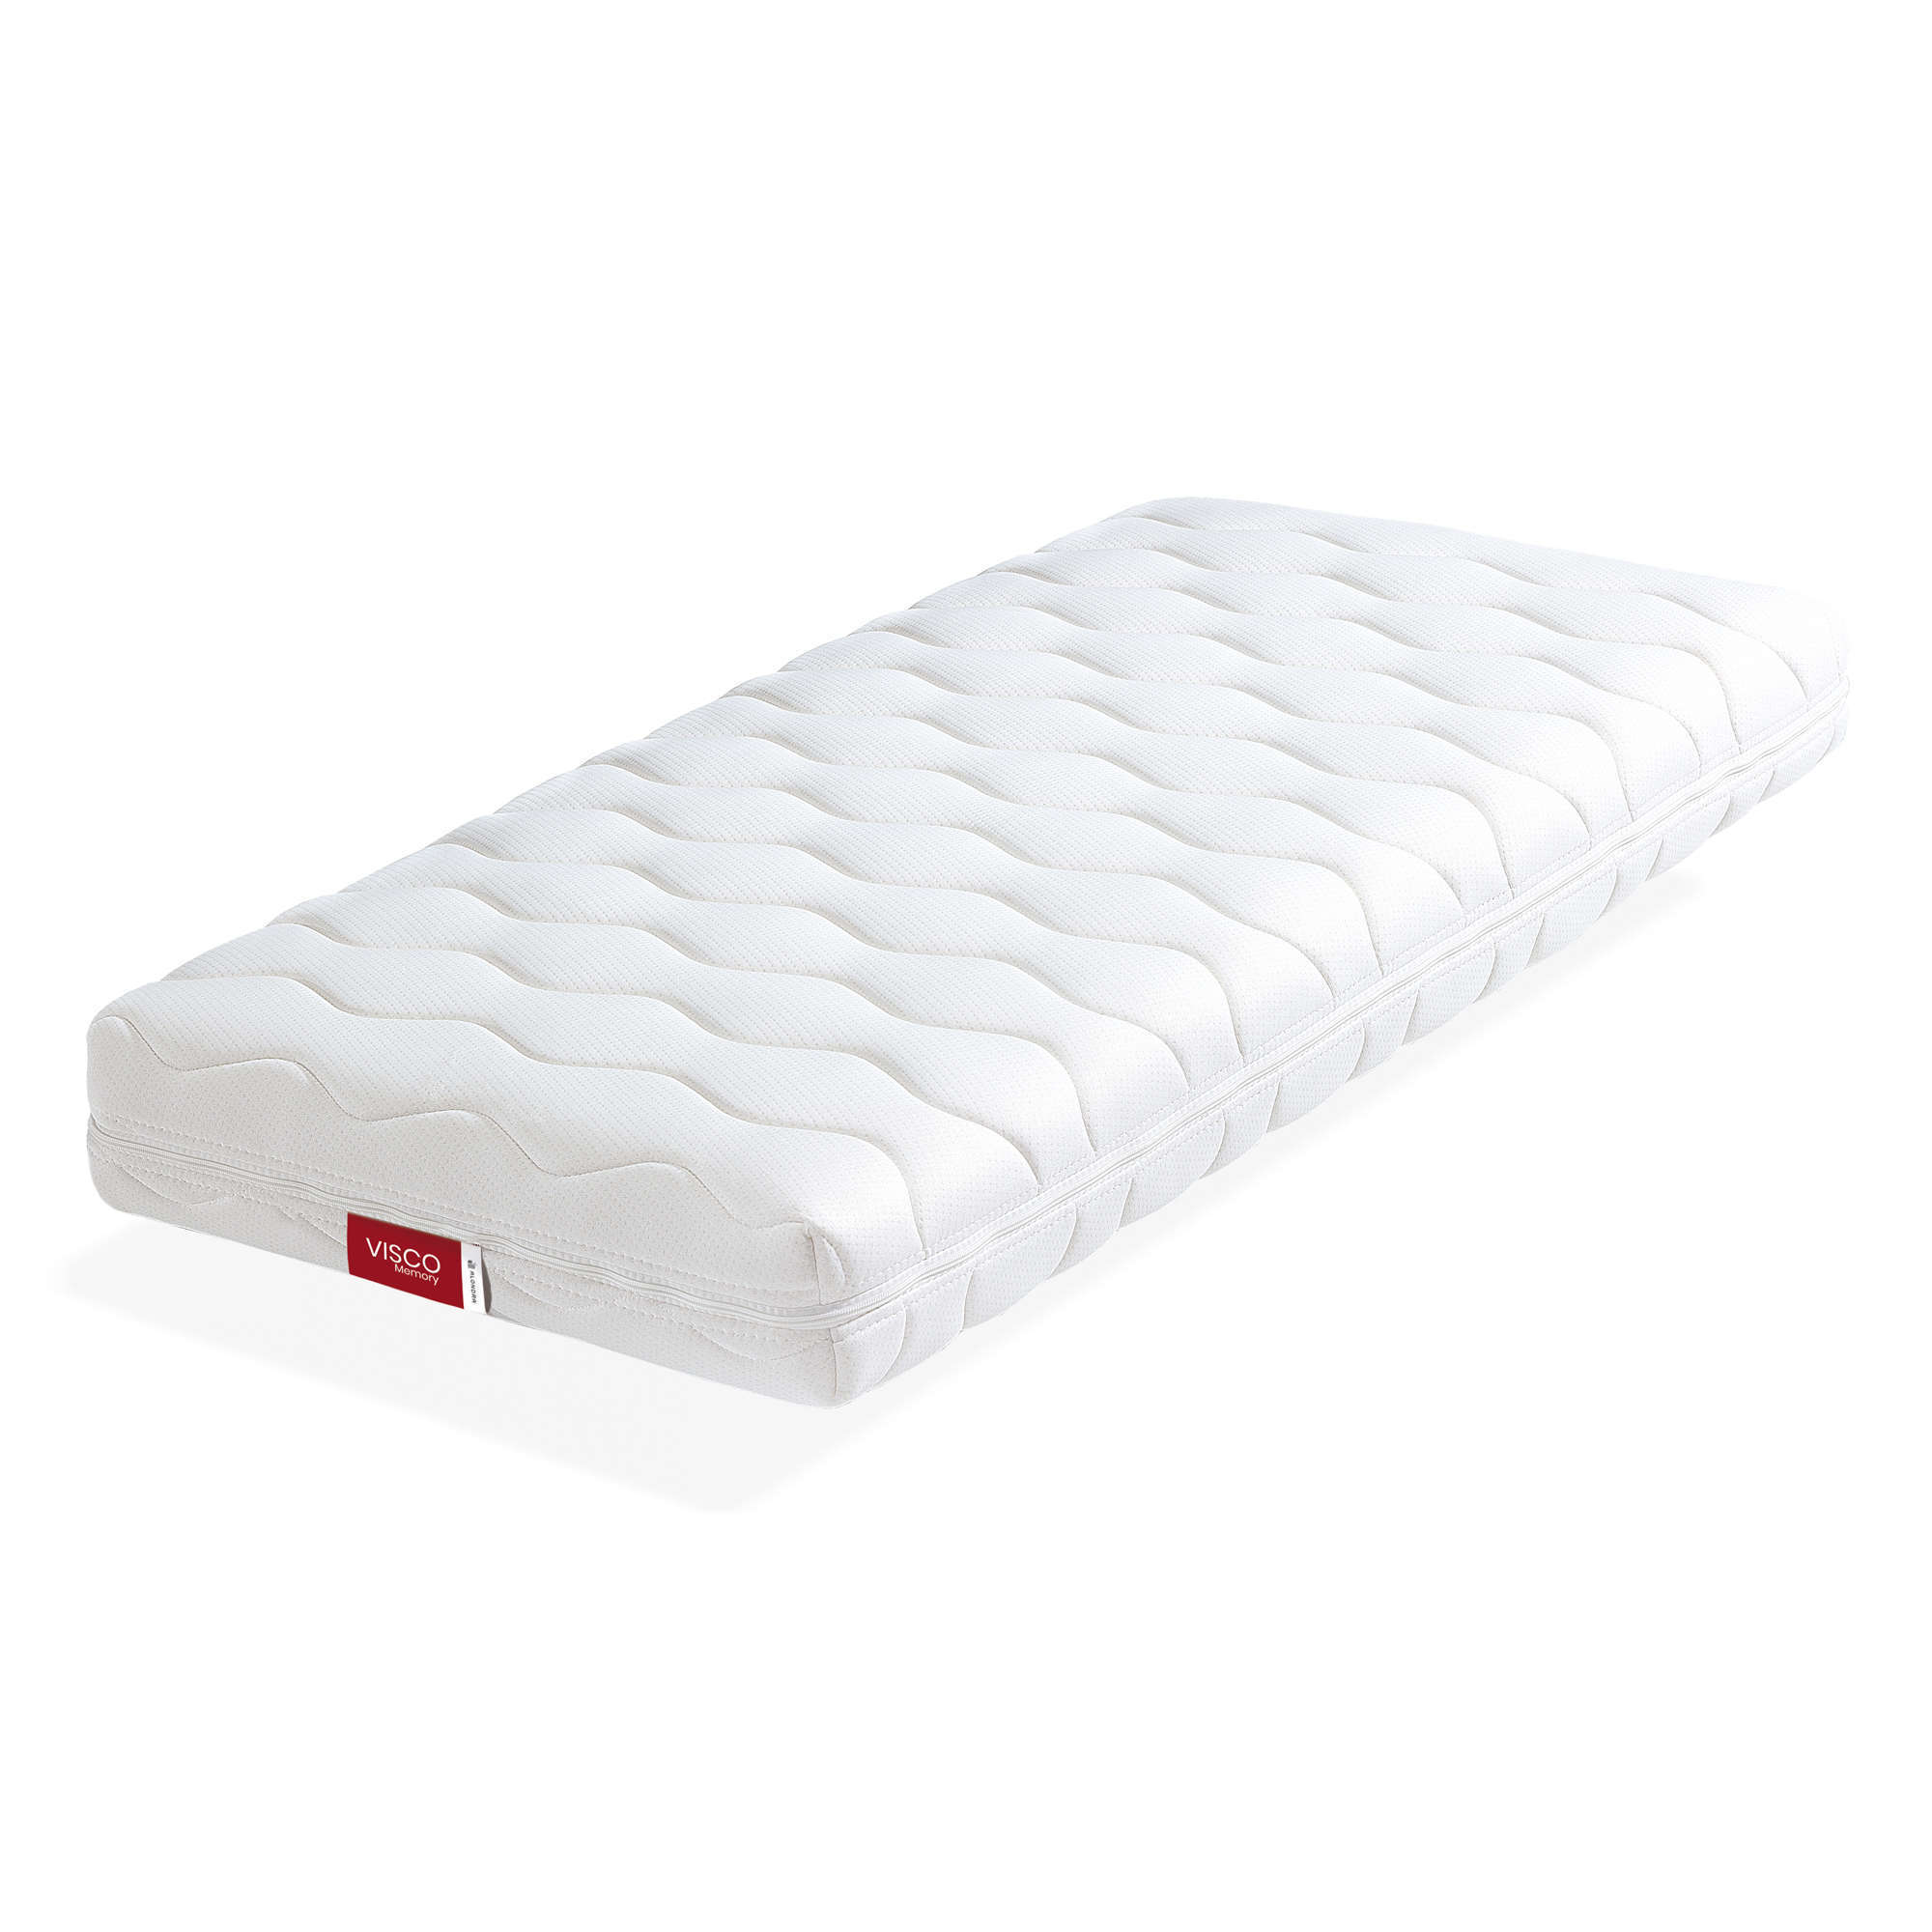 Memory foam mattress for co-sleeping cot 60x120cm